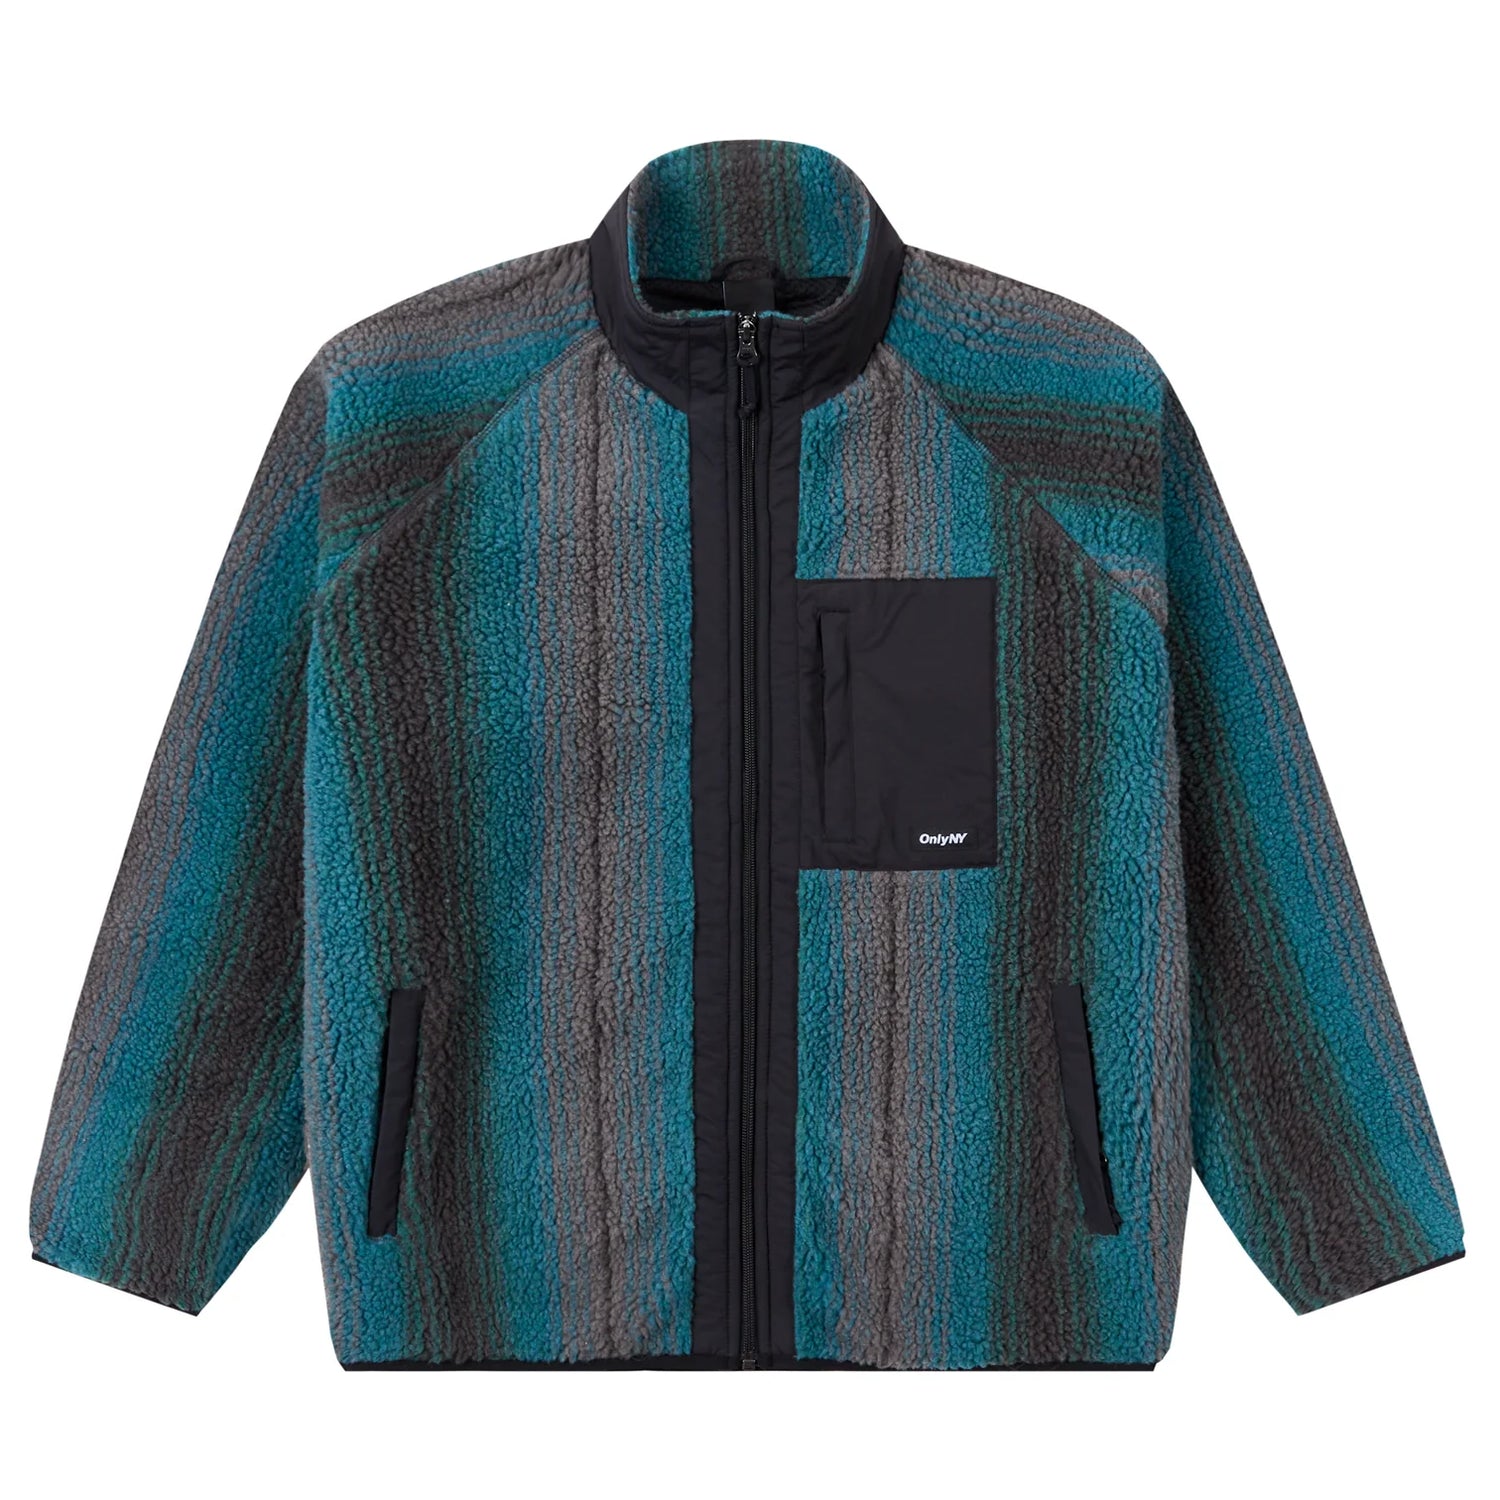 Only NY Radiant Stripe Fleece Jacket - Teal Multi